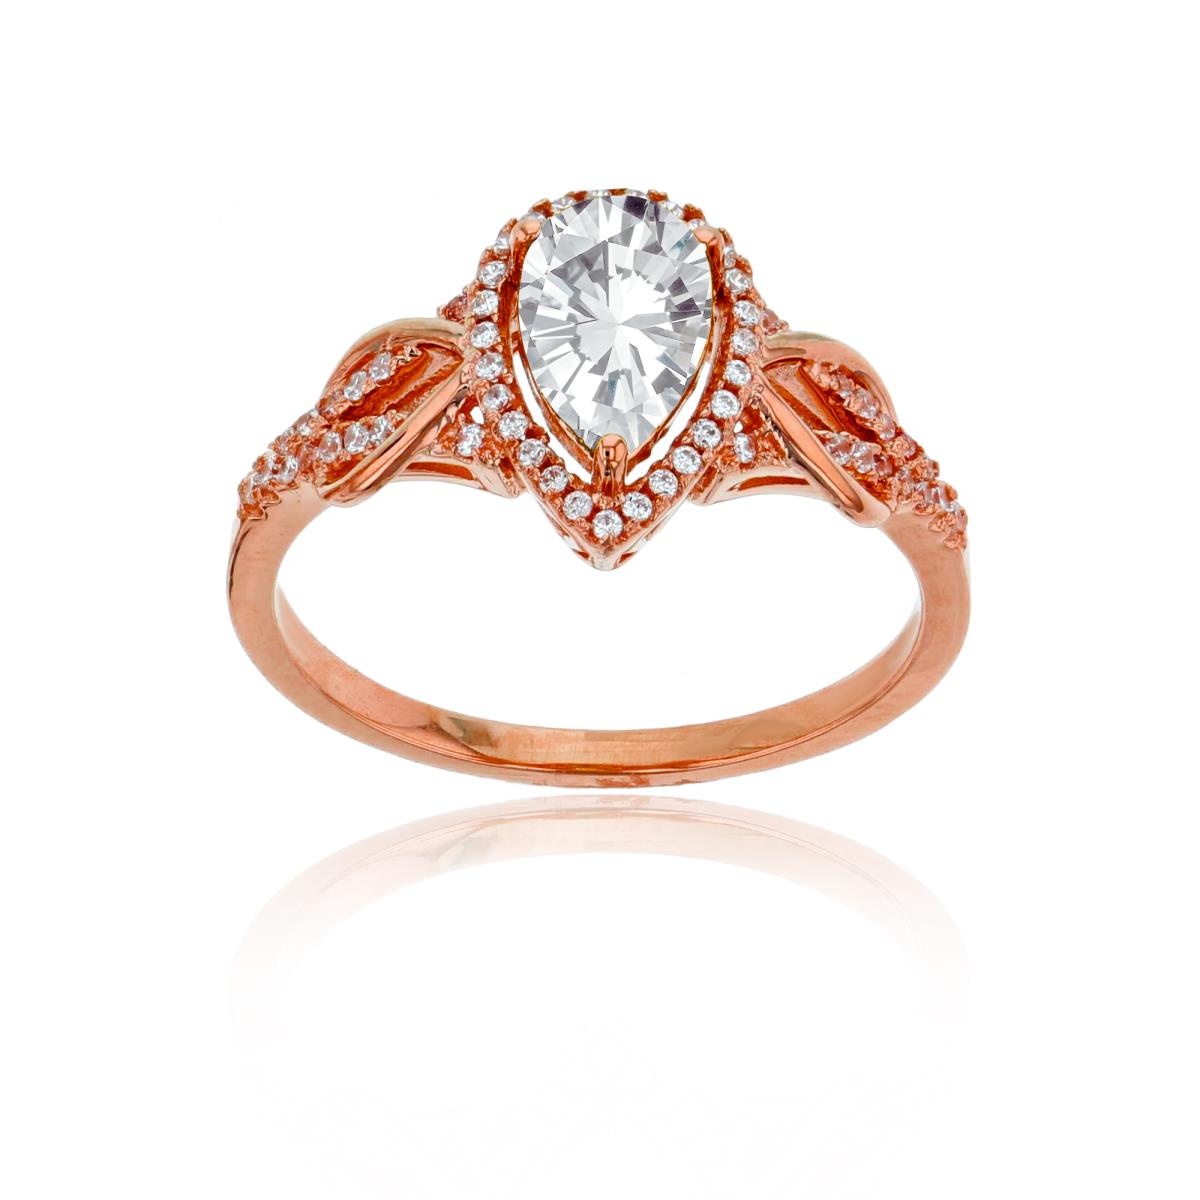 10K Rose Gold 0.17CTTW Rnd Diamond & 8x5mm Pear Cut White Topaz Knot Sides Ring